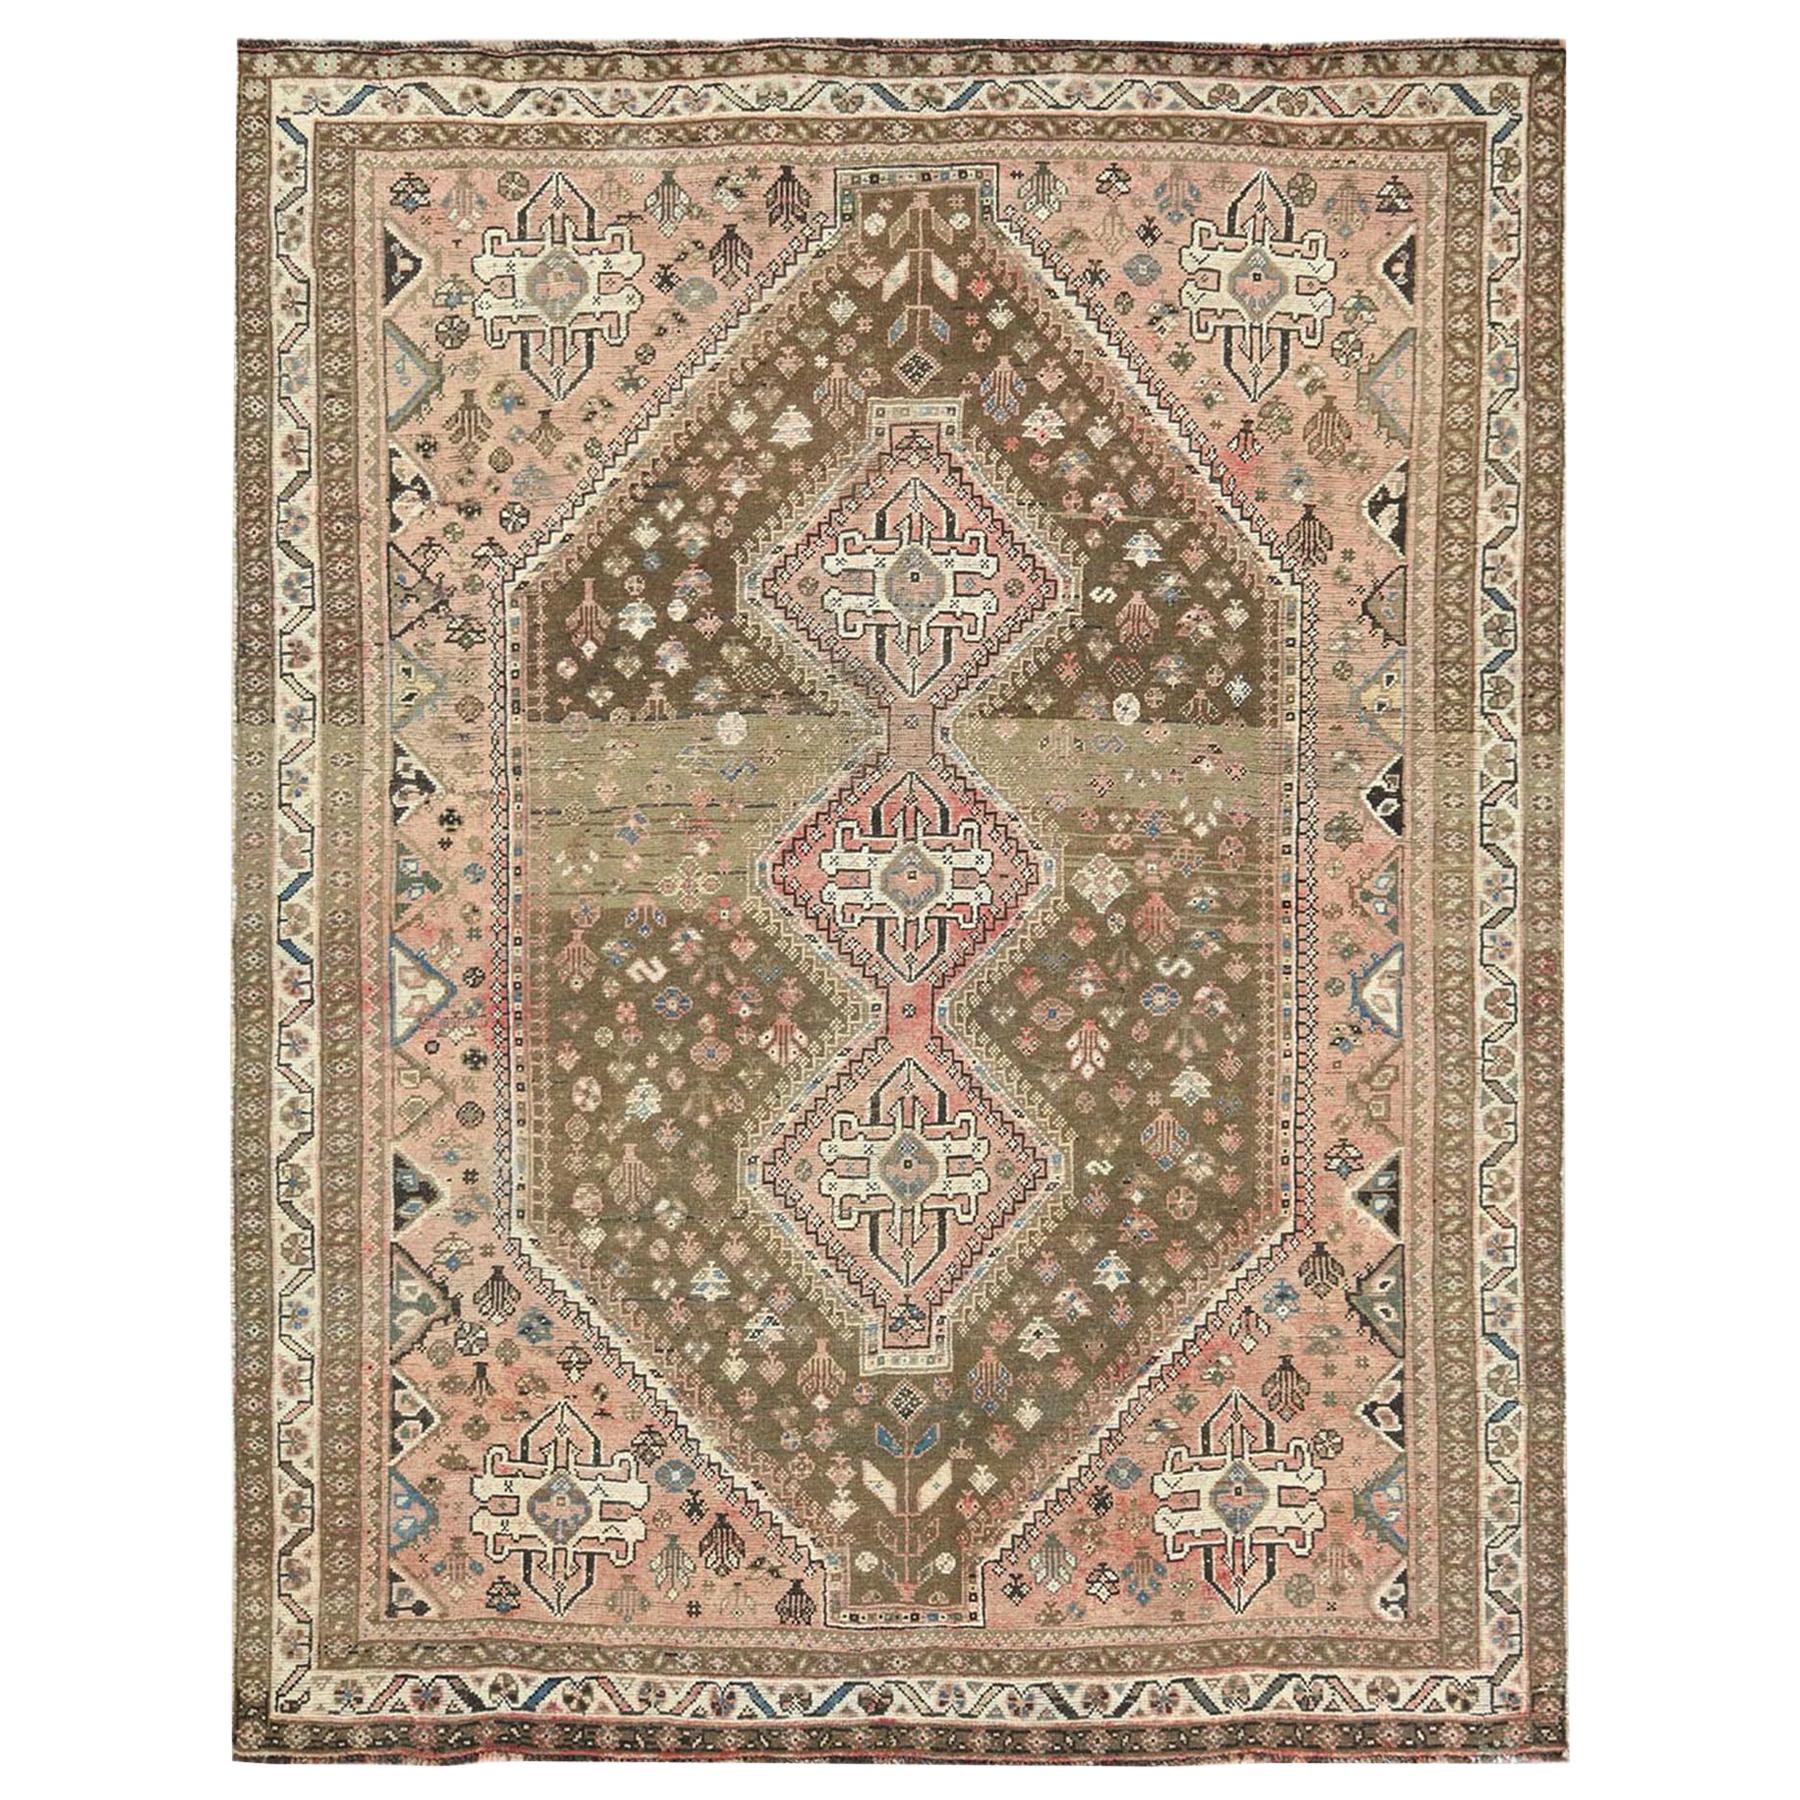 Large Worn Down Vintage Persian Shiraz, Abrash, Geometric Design Handmade Rug